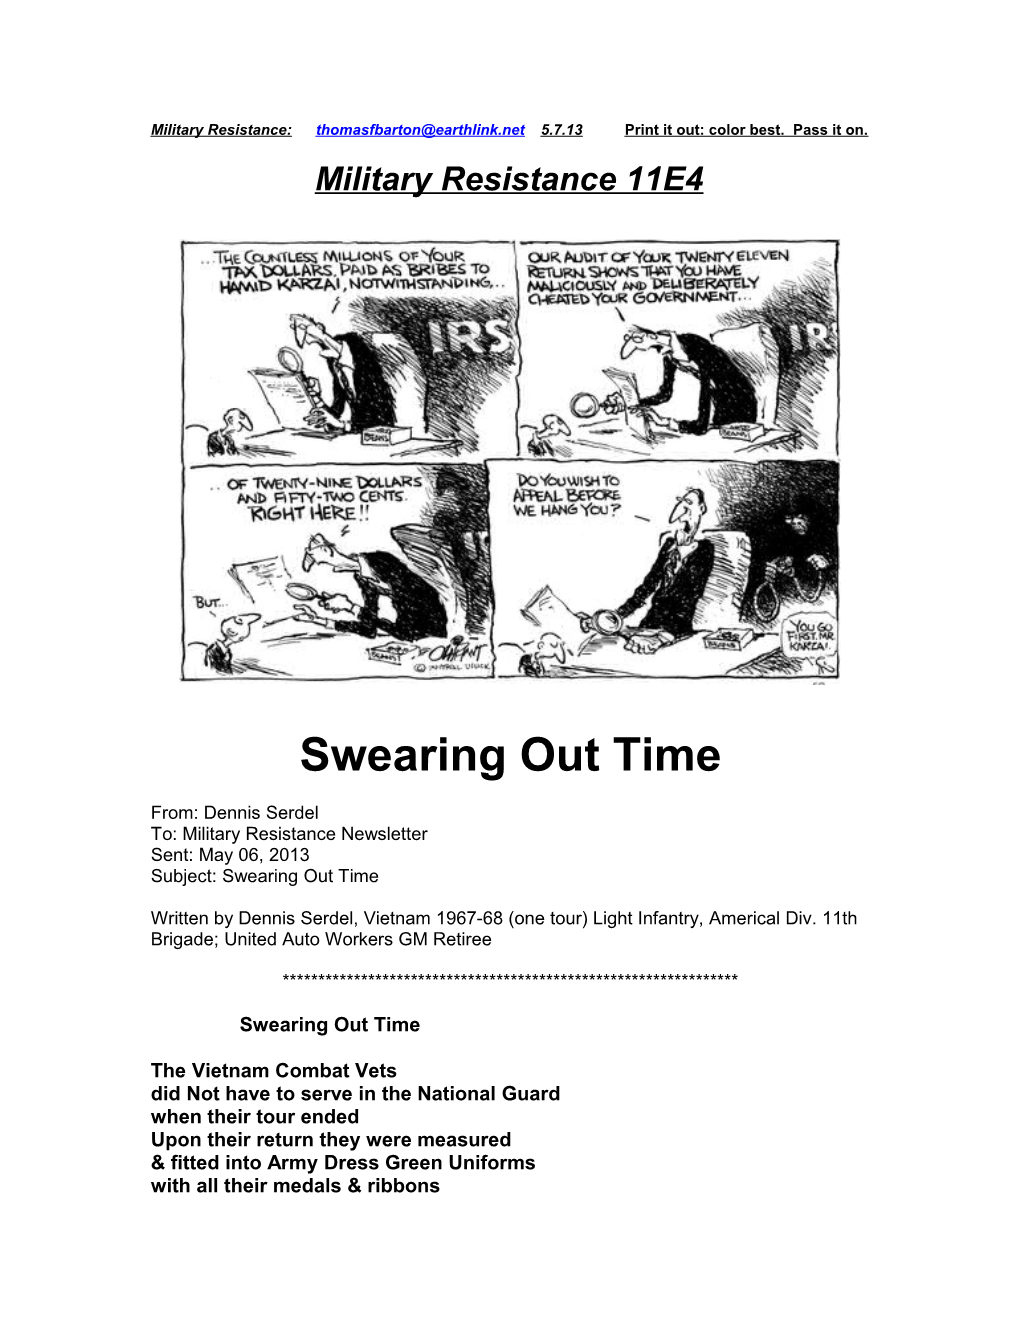 Military Resistance 11E4